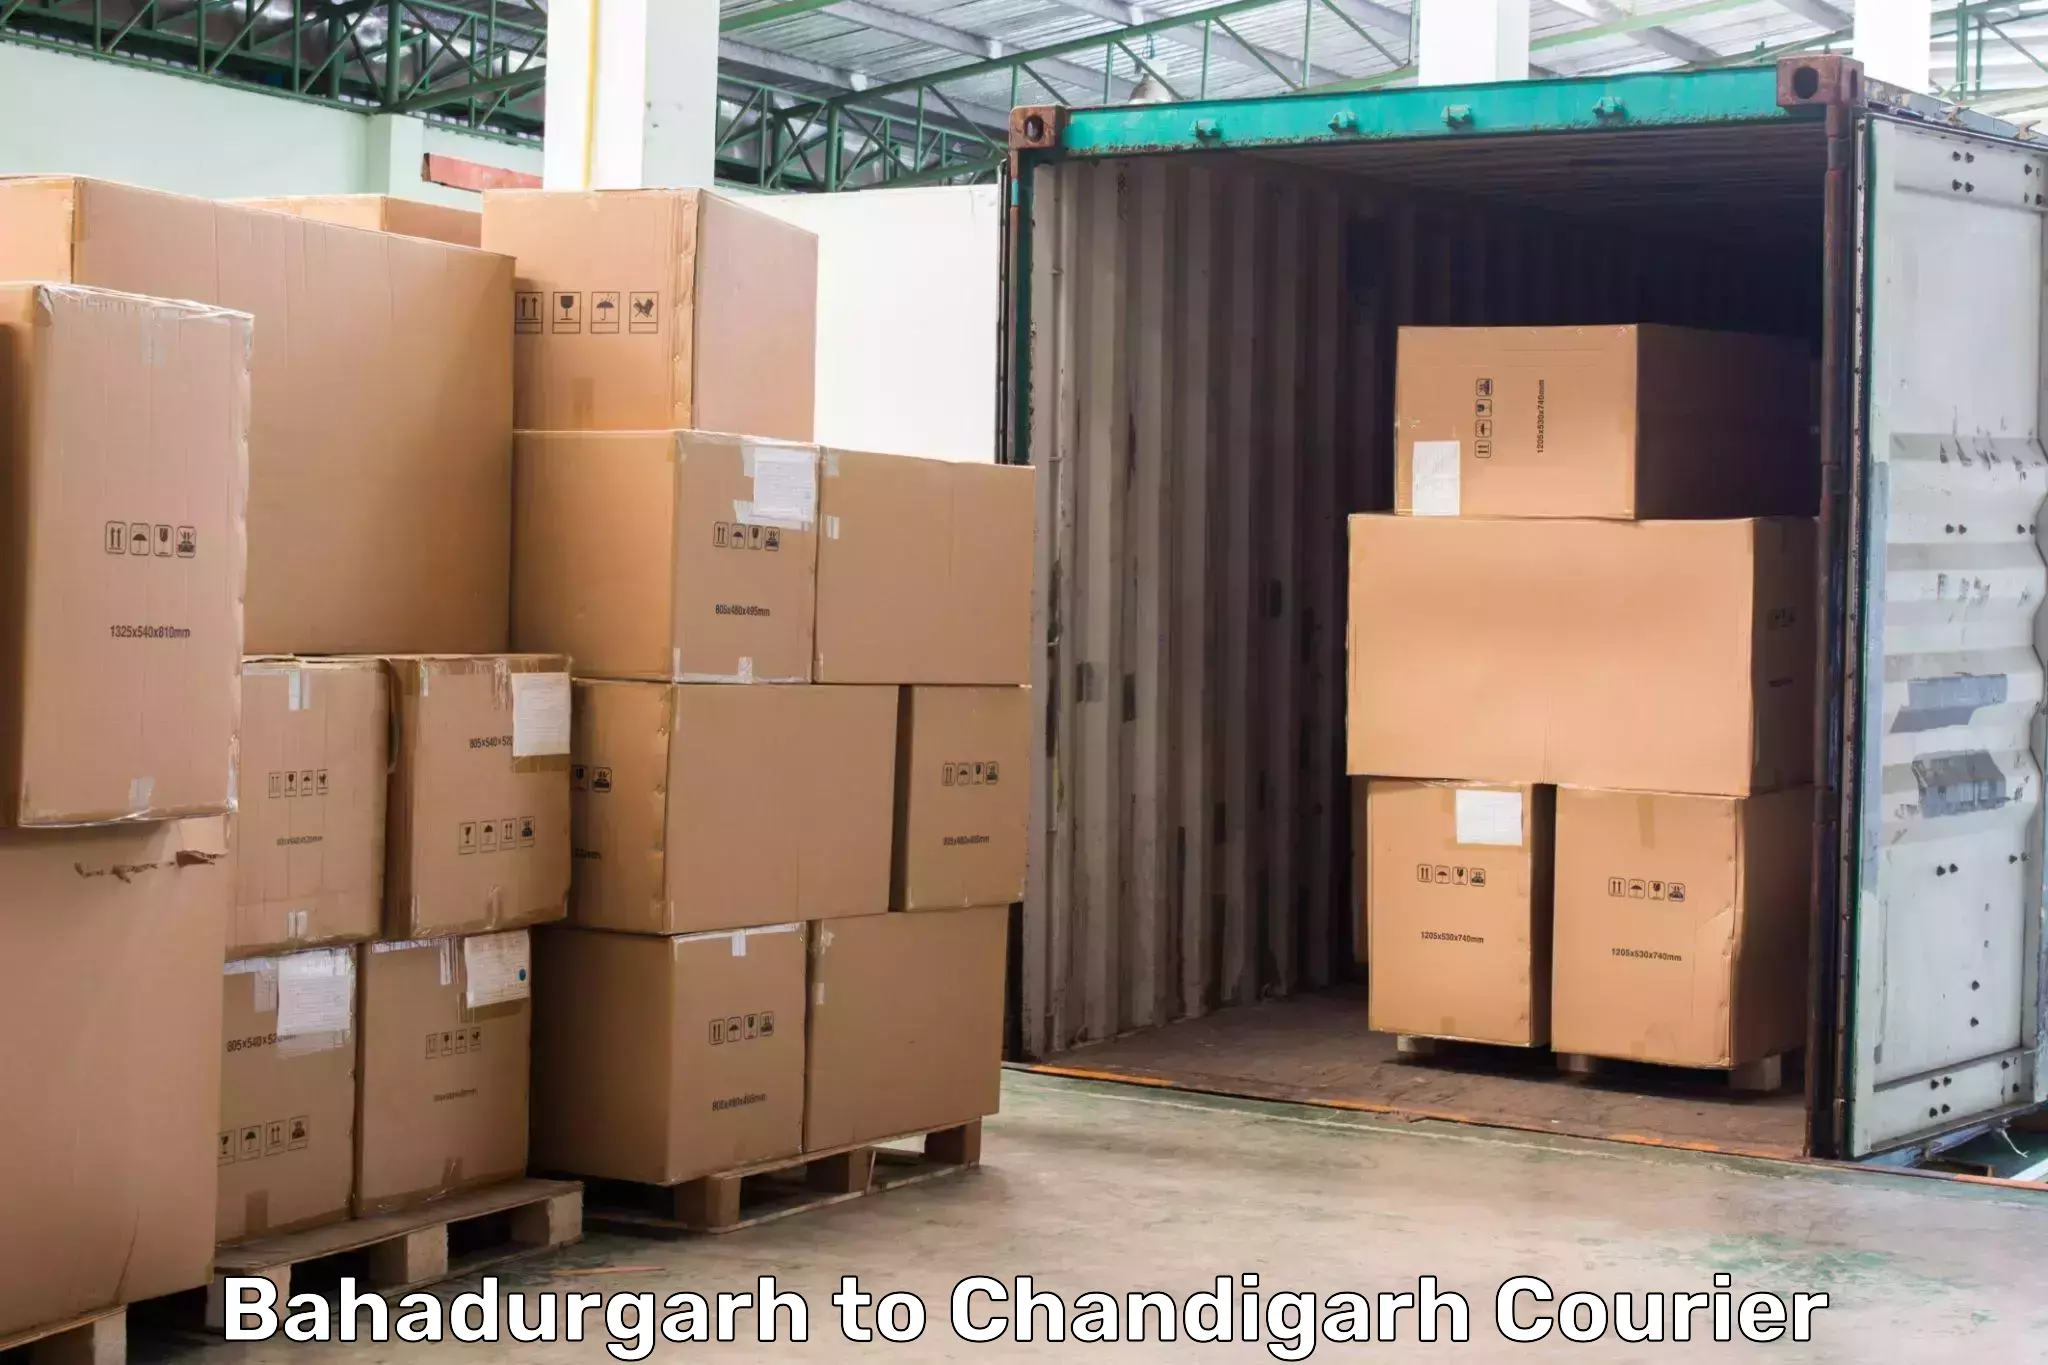 Express delivery capabilities Bahadurgarh to Chandigarh